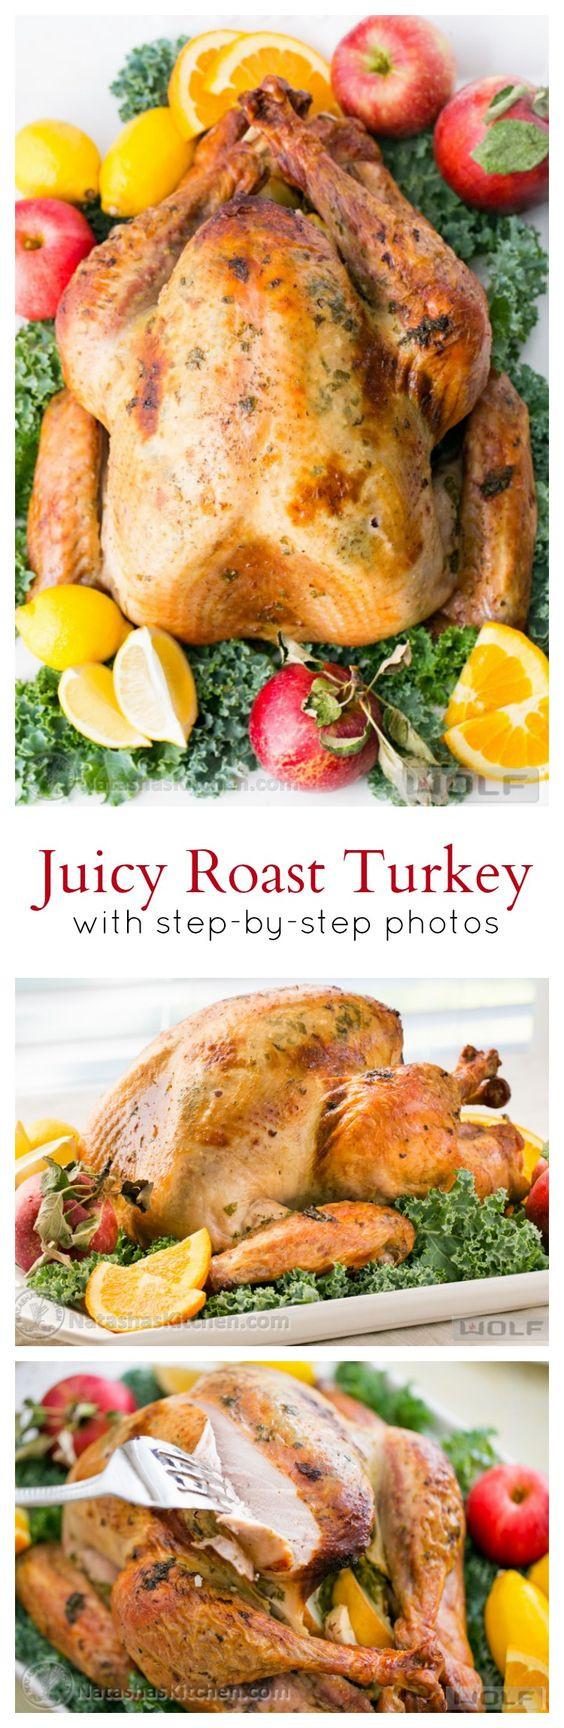 Thanksgiving Dinner Recipes
 The BEST Thanksgiving Dinner Holiday Favorite Menu Recipes